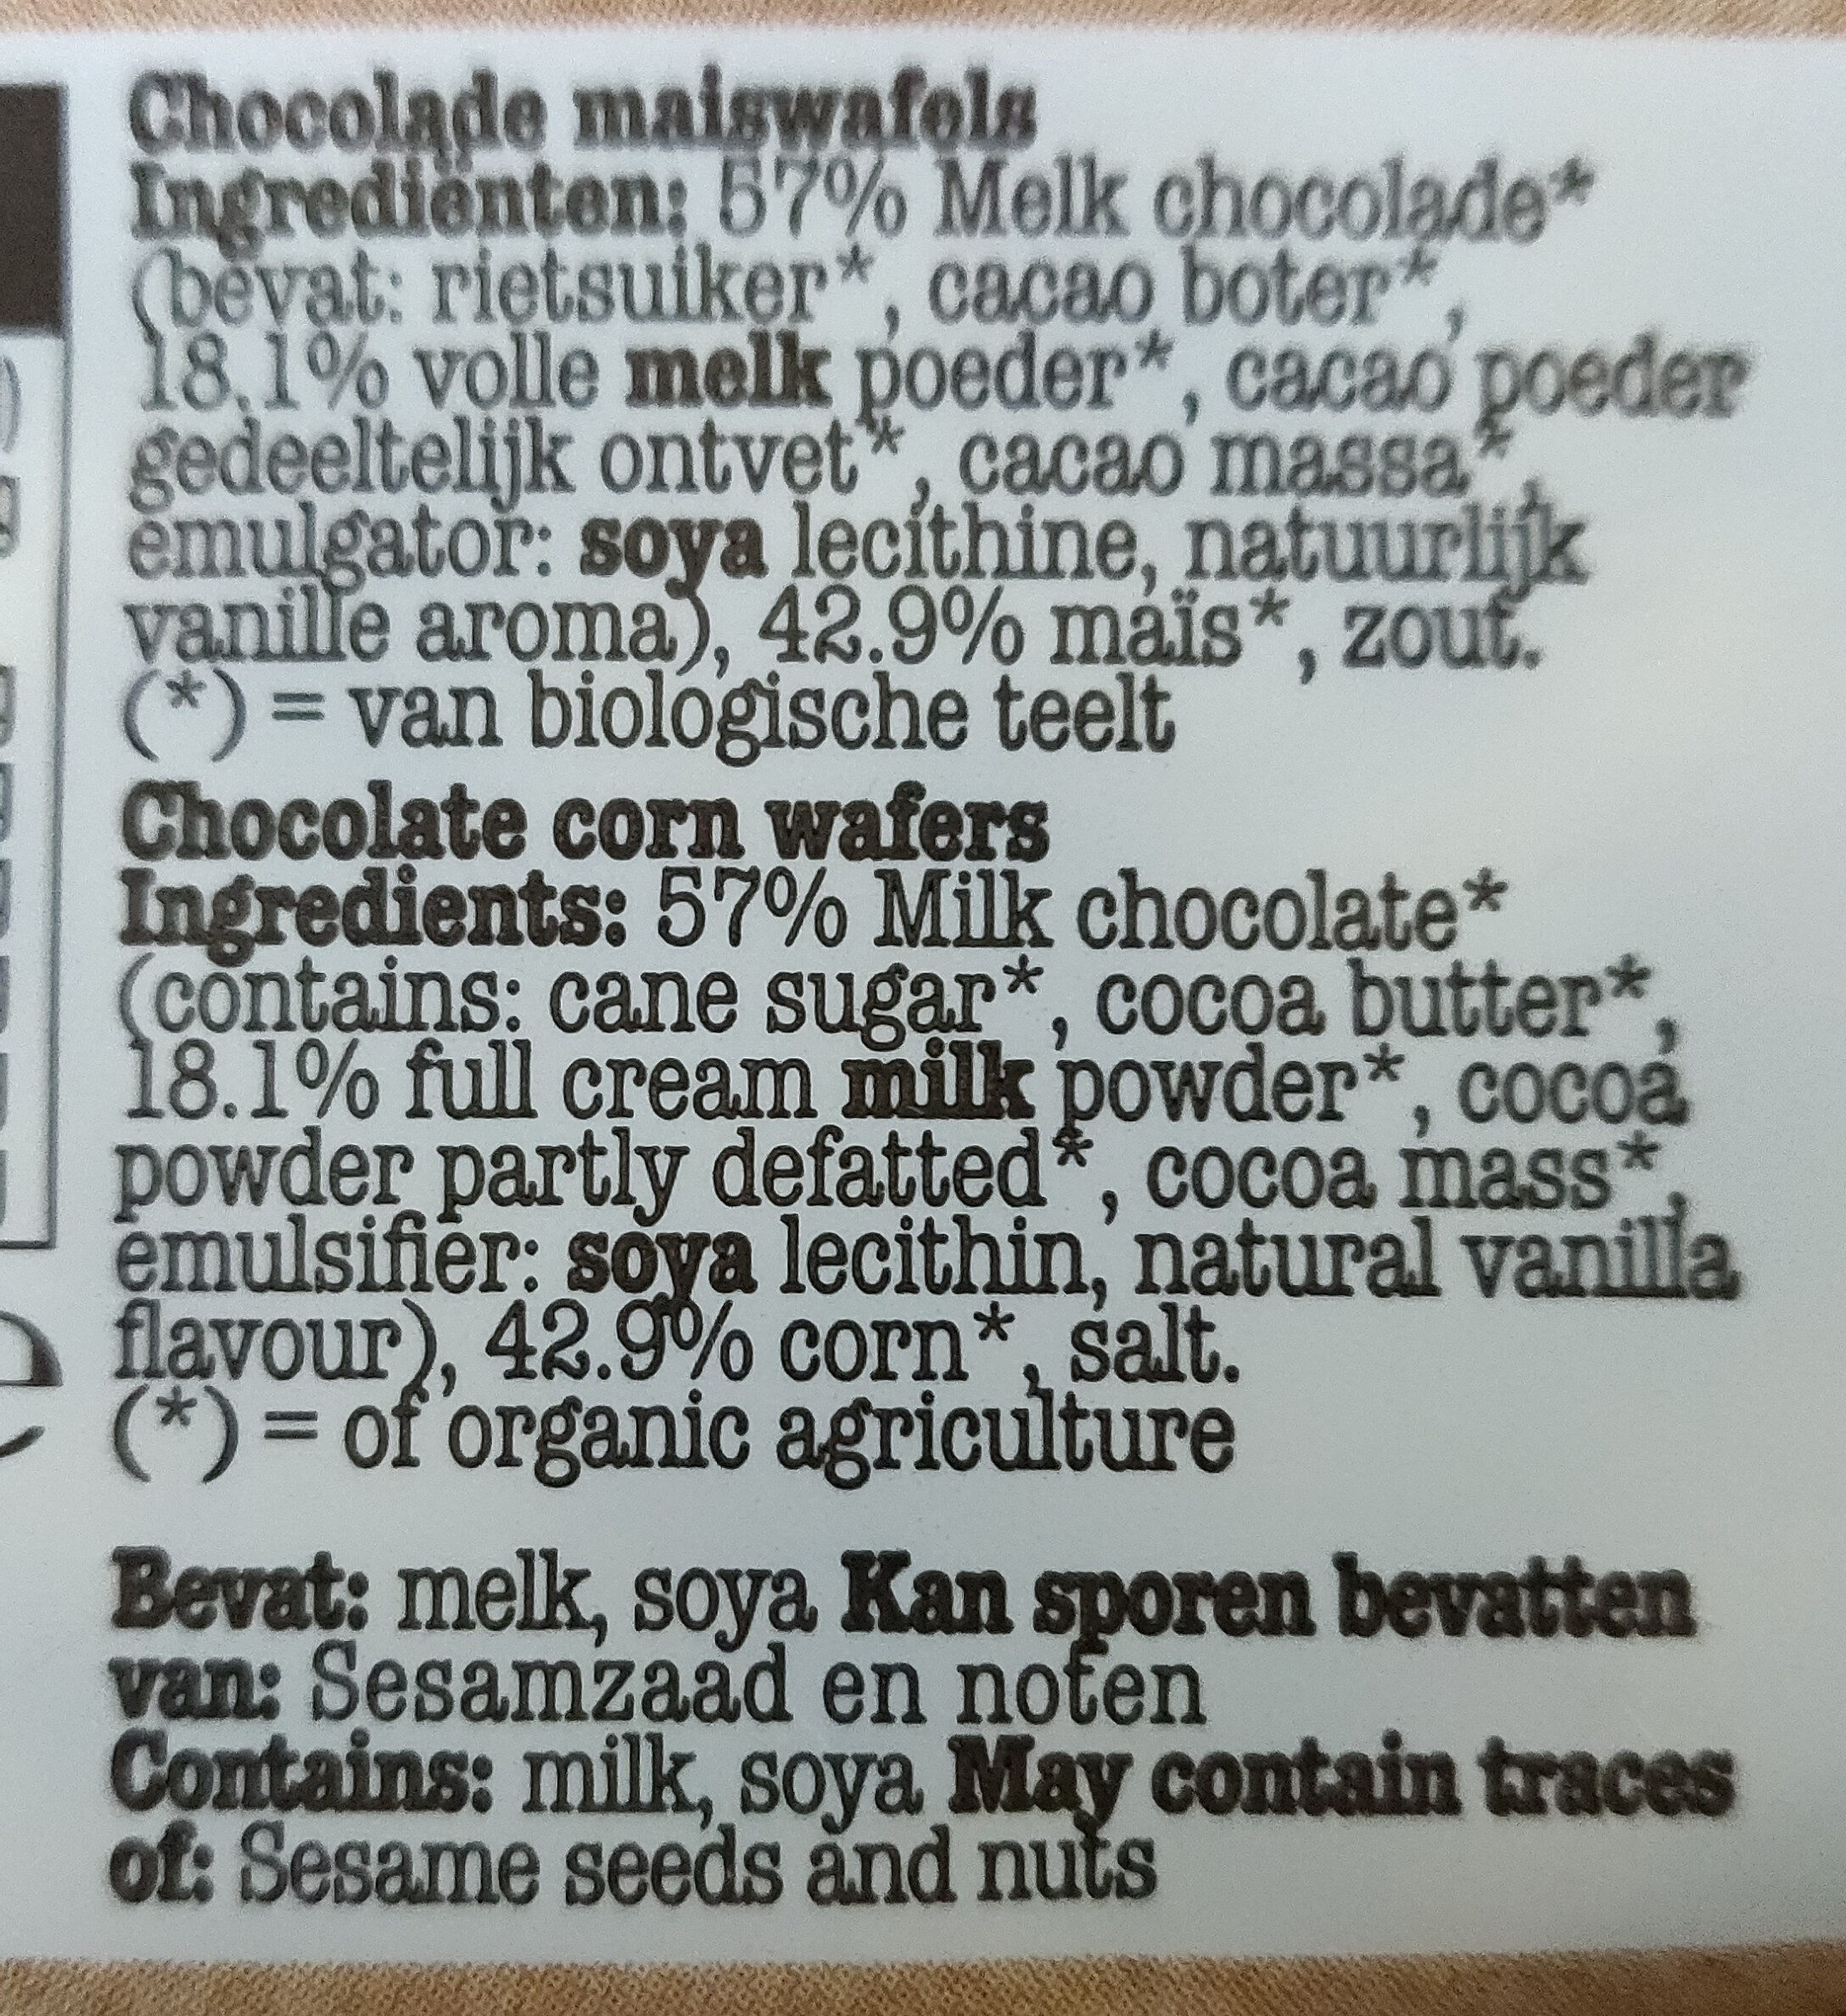 Maïswafels melk chocolade - Ingrédients - nl